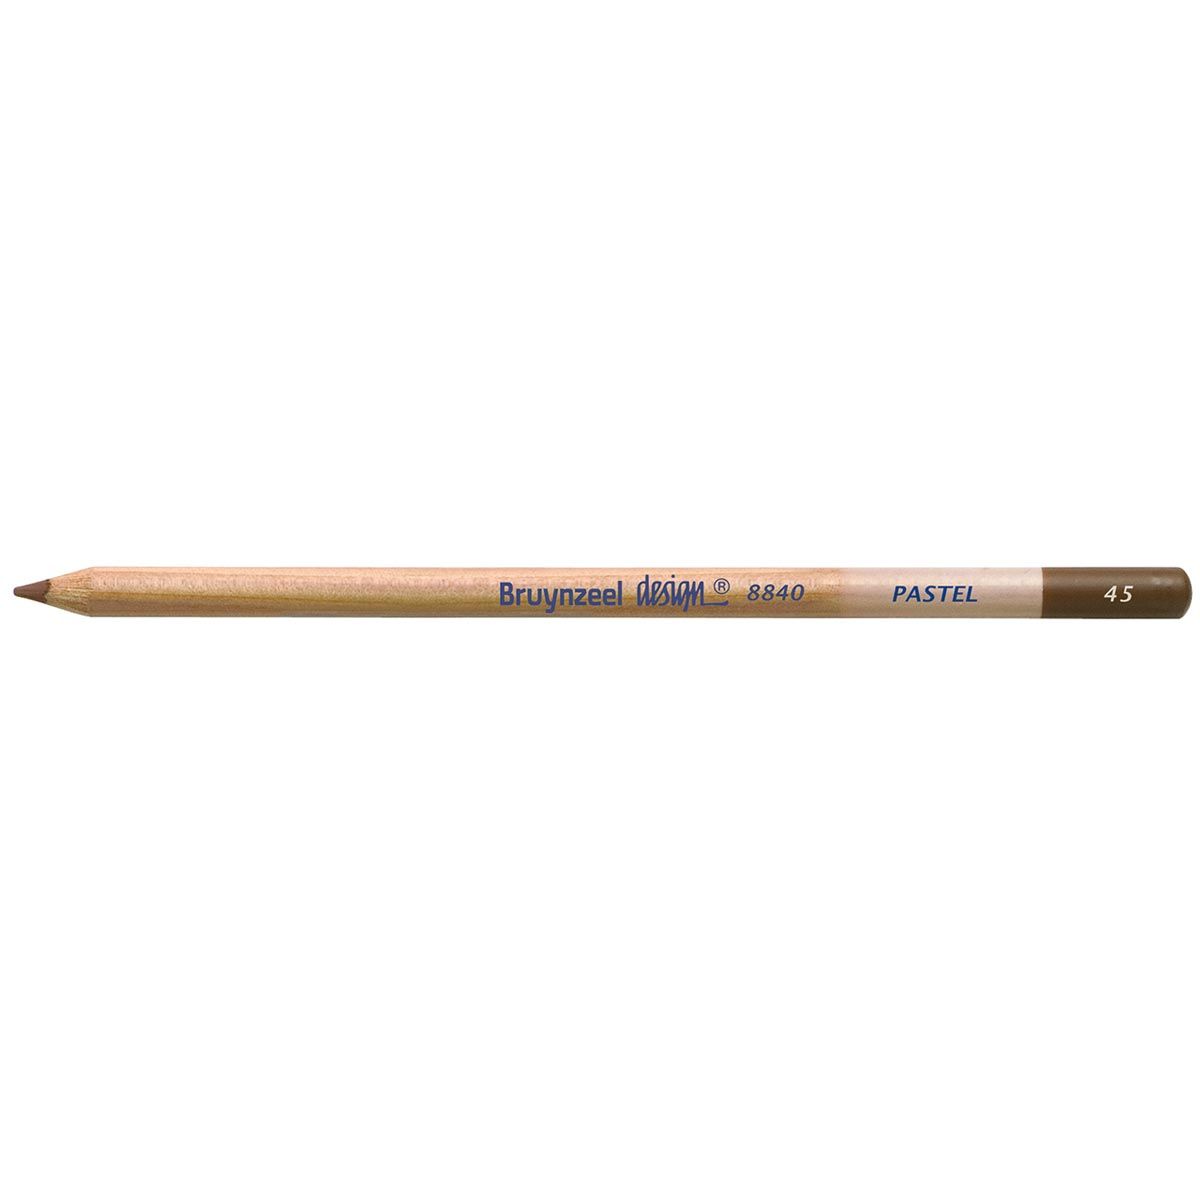 Bruynzeel Design Pastel Pencil - Havana Brown 45